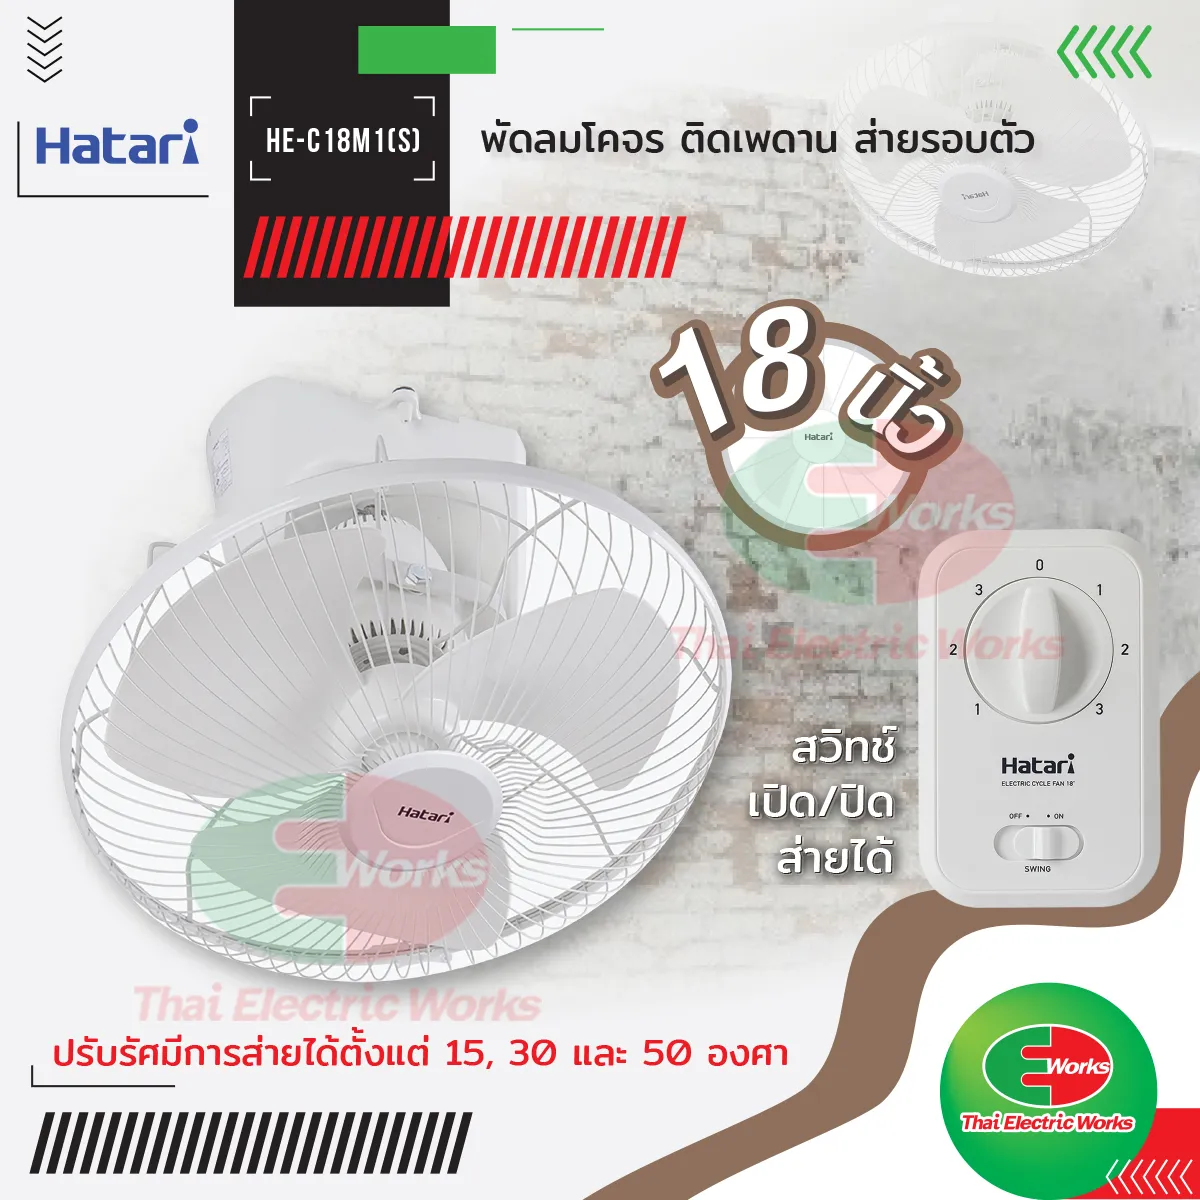 Hatari พัดลมโคจร ติดเพดาน 18 นิ้ว รุ่น HE-C18M1(S) พร้อมสวิทช์ เปิด-ปิด ส่ายได้  พัดลม ฮาตาริ  /   ไทยอิเล็คทริคเวิร์ค Thaielectricworks